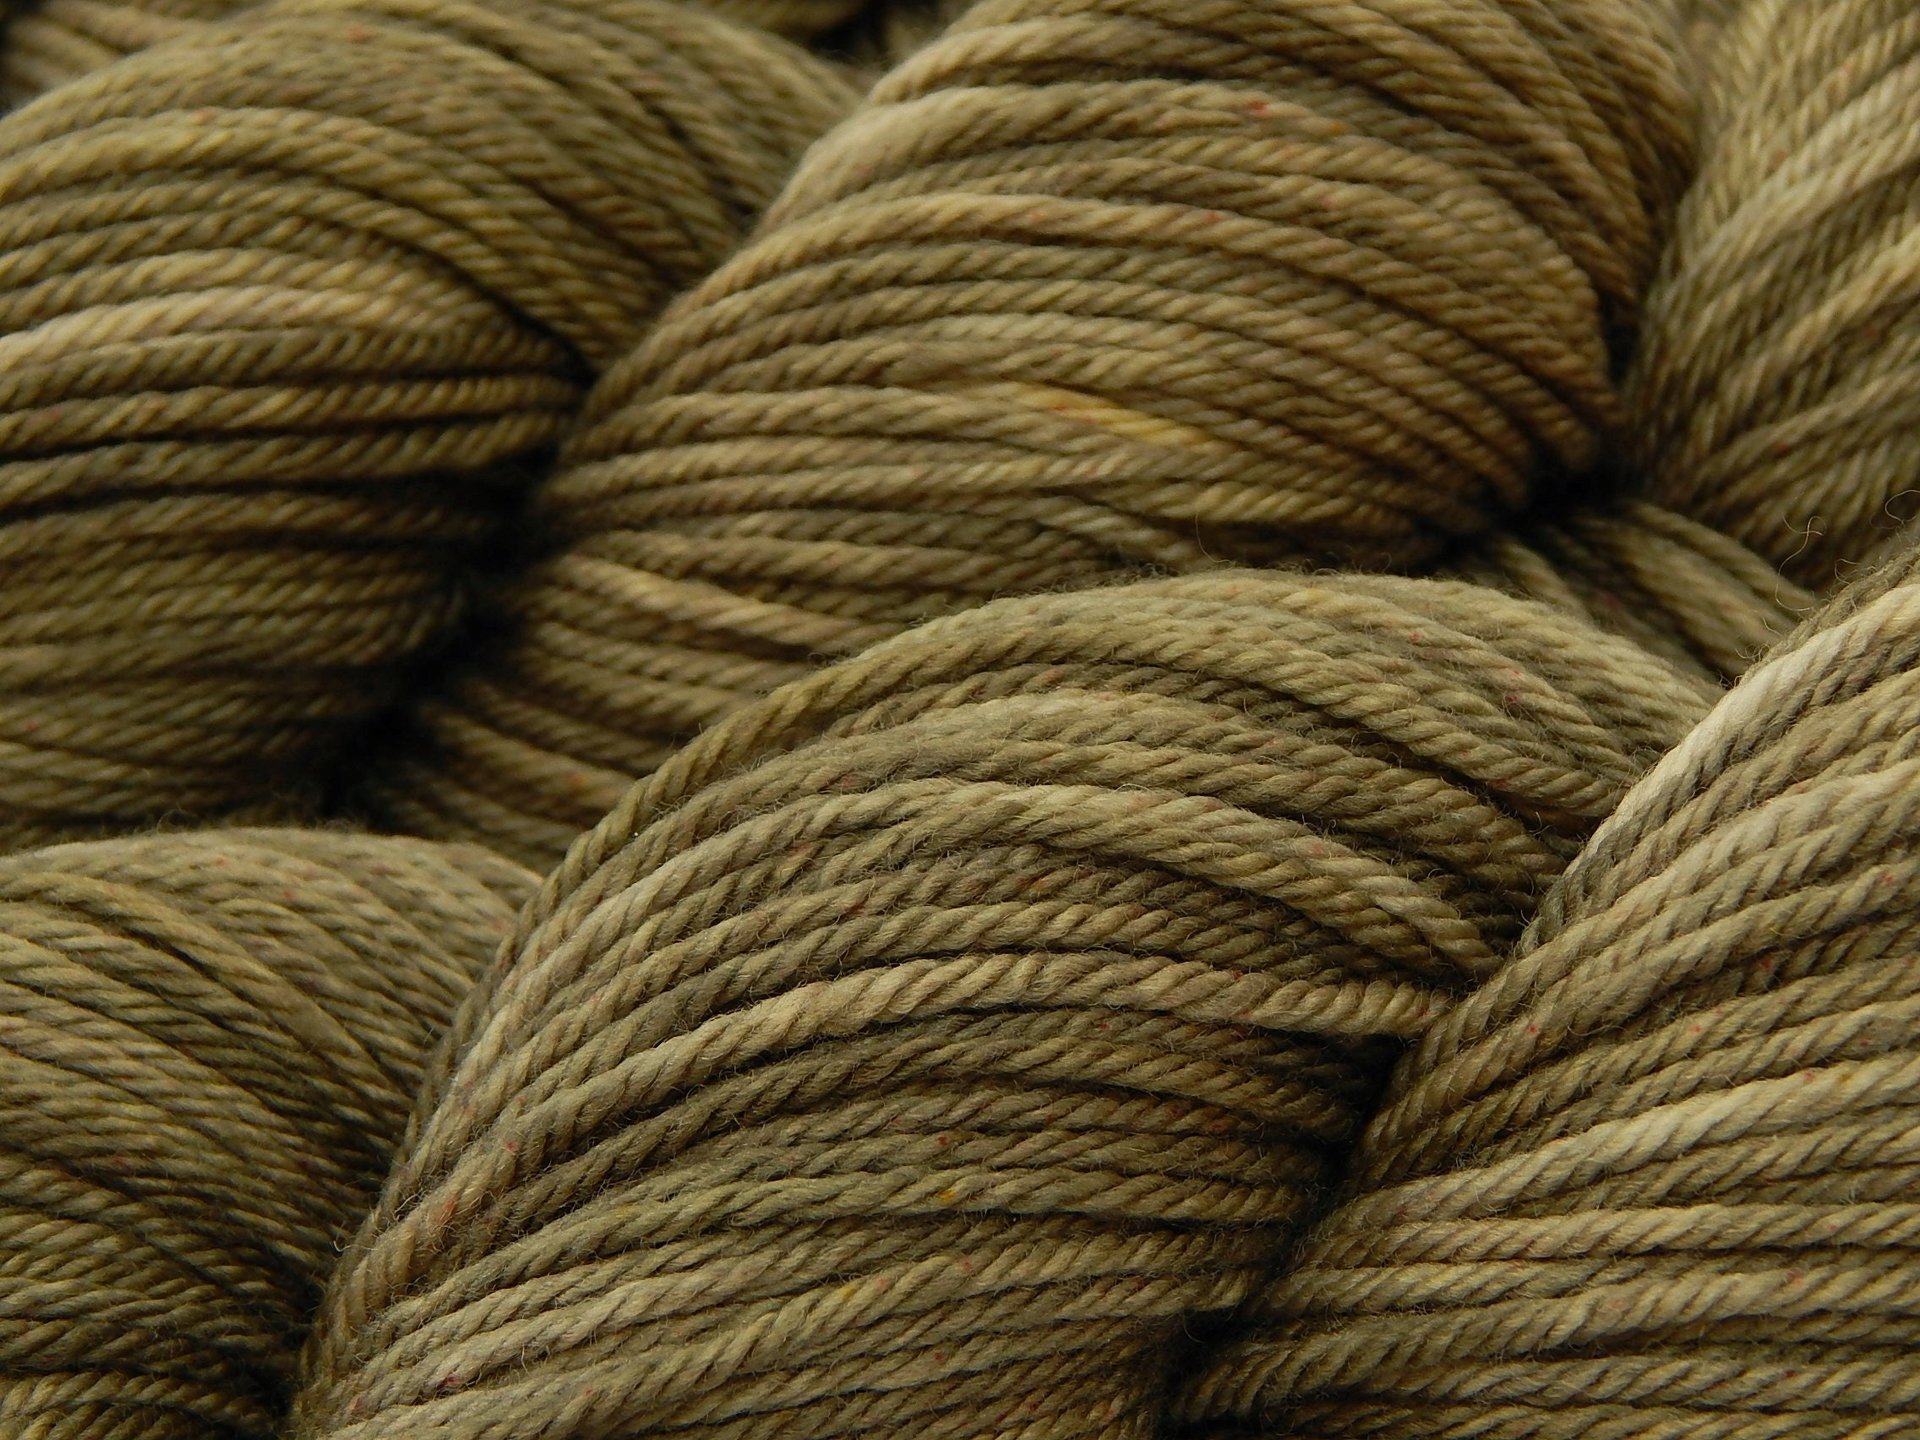 Hand Dyed Yarn, Worsted Weight Superwash Merino Wool - Driftwood - Indie Dyer Khaki Tan Knitting Yarn, Neutral Tonal Crochet Yarn Skein